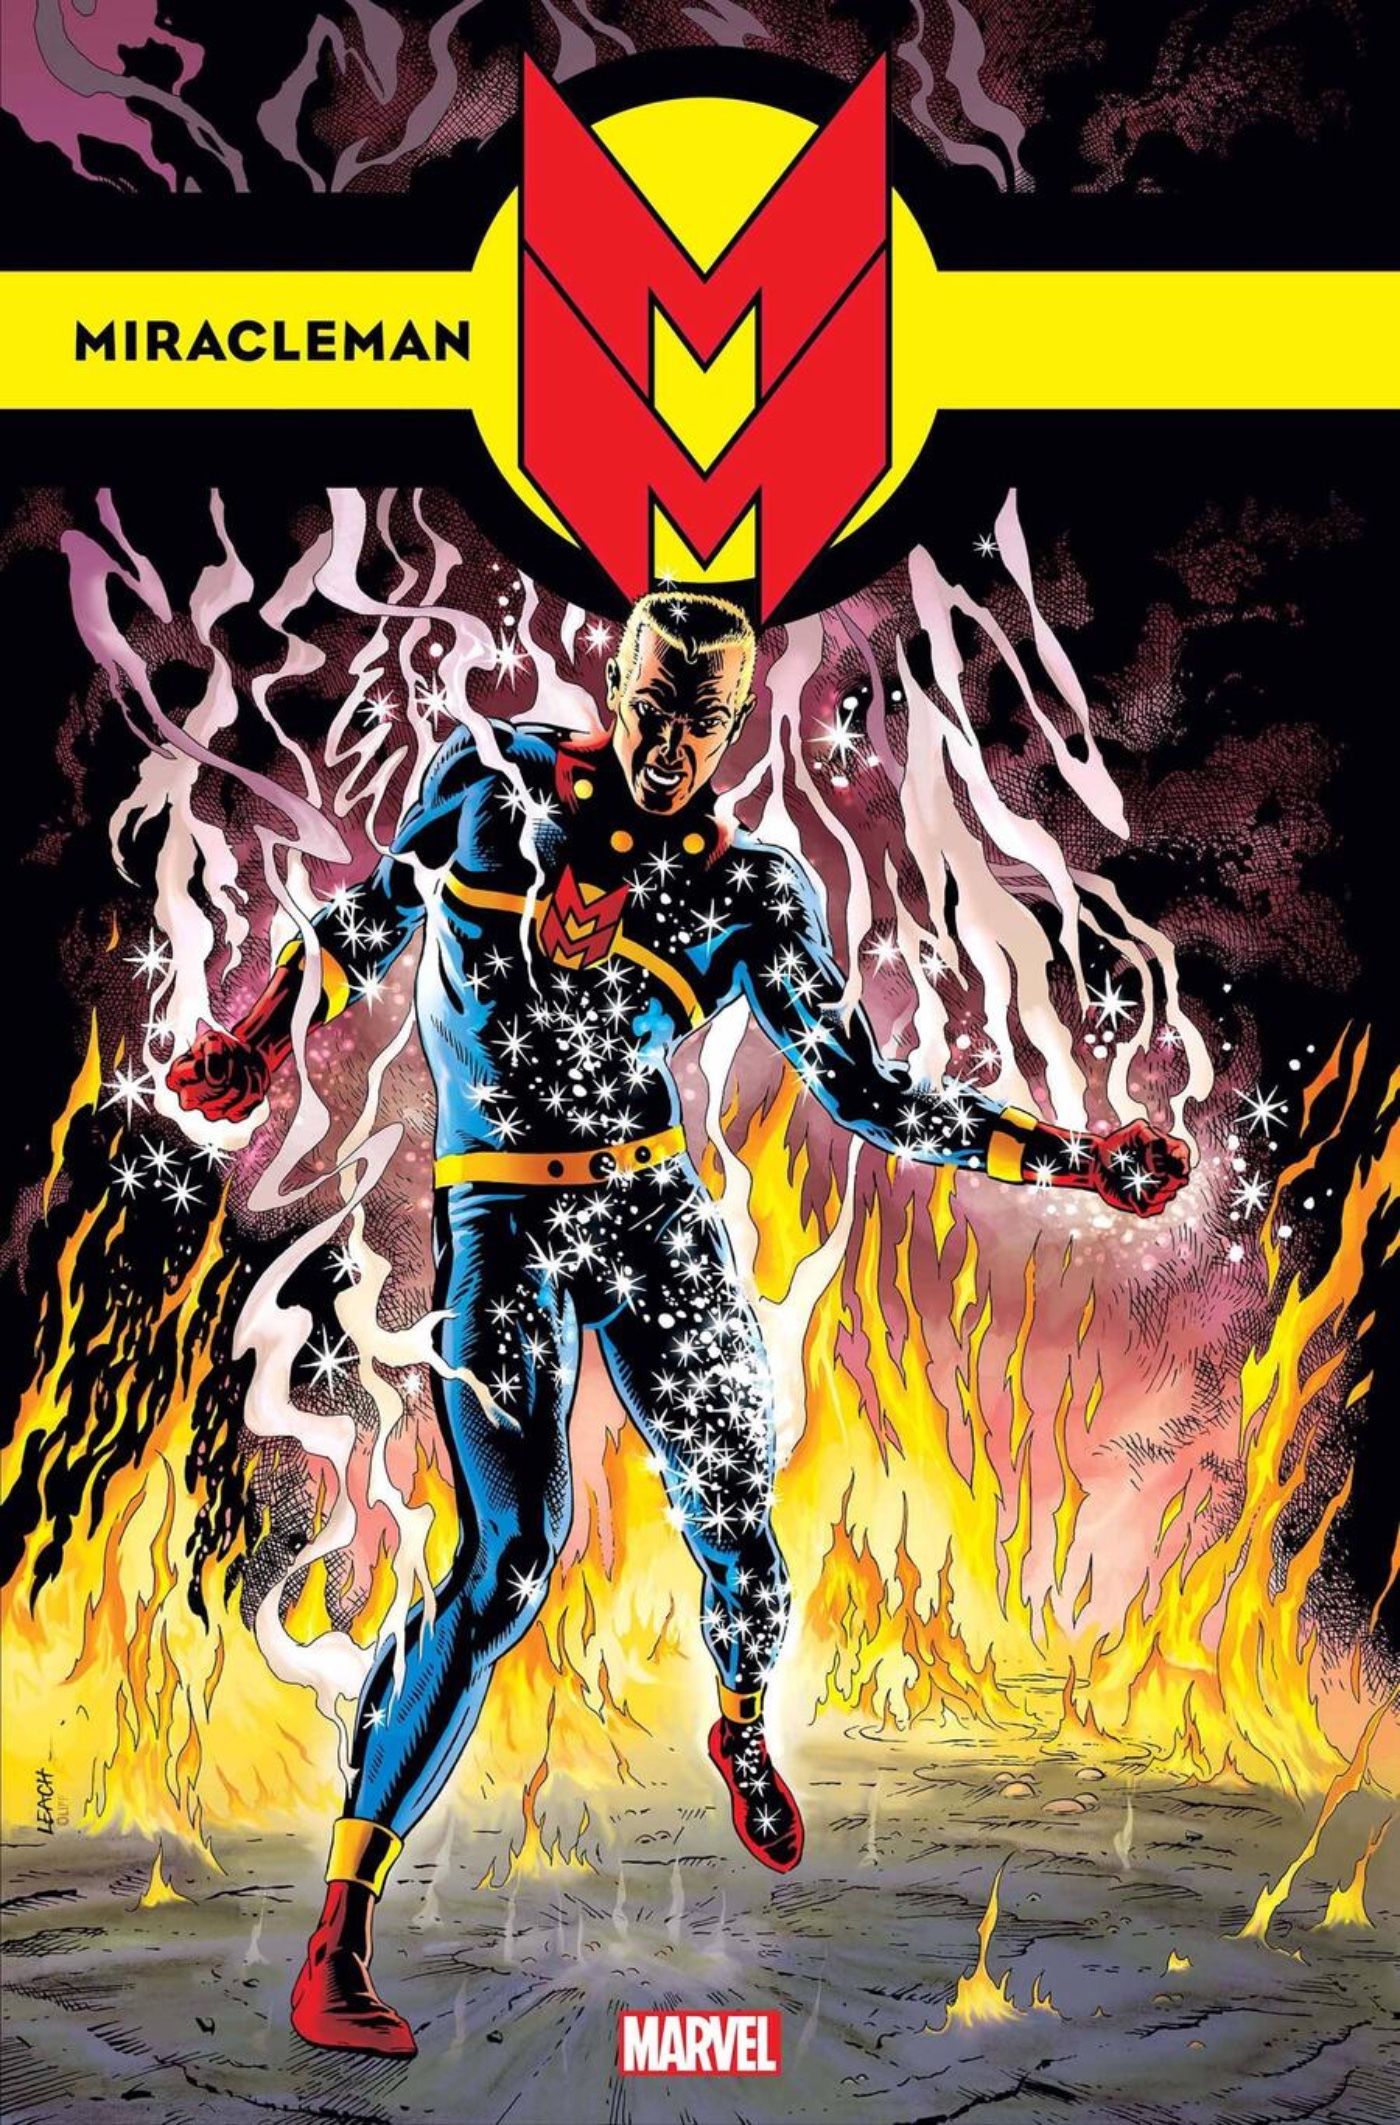 Alan Moore’s Dark Shazam, Miracleman, Getting New Omnibus From Marvel